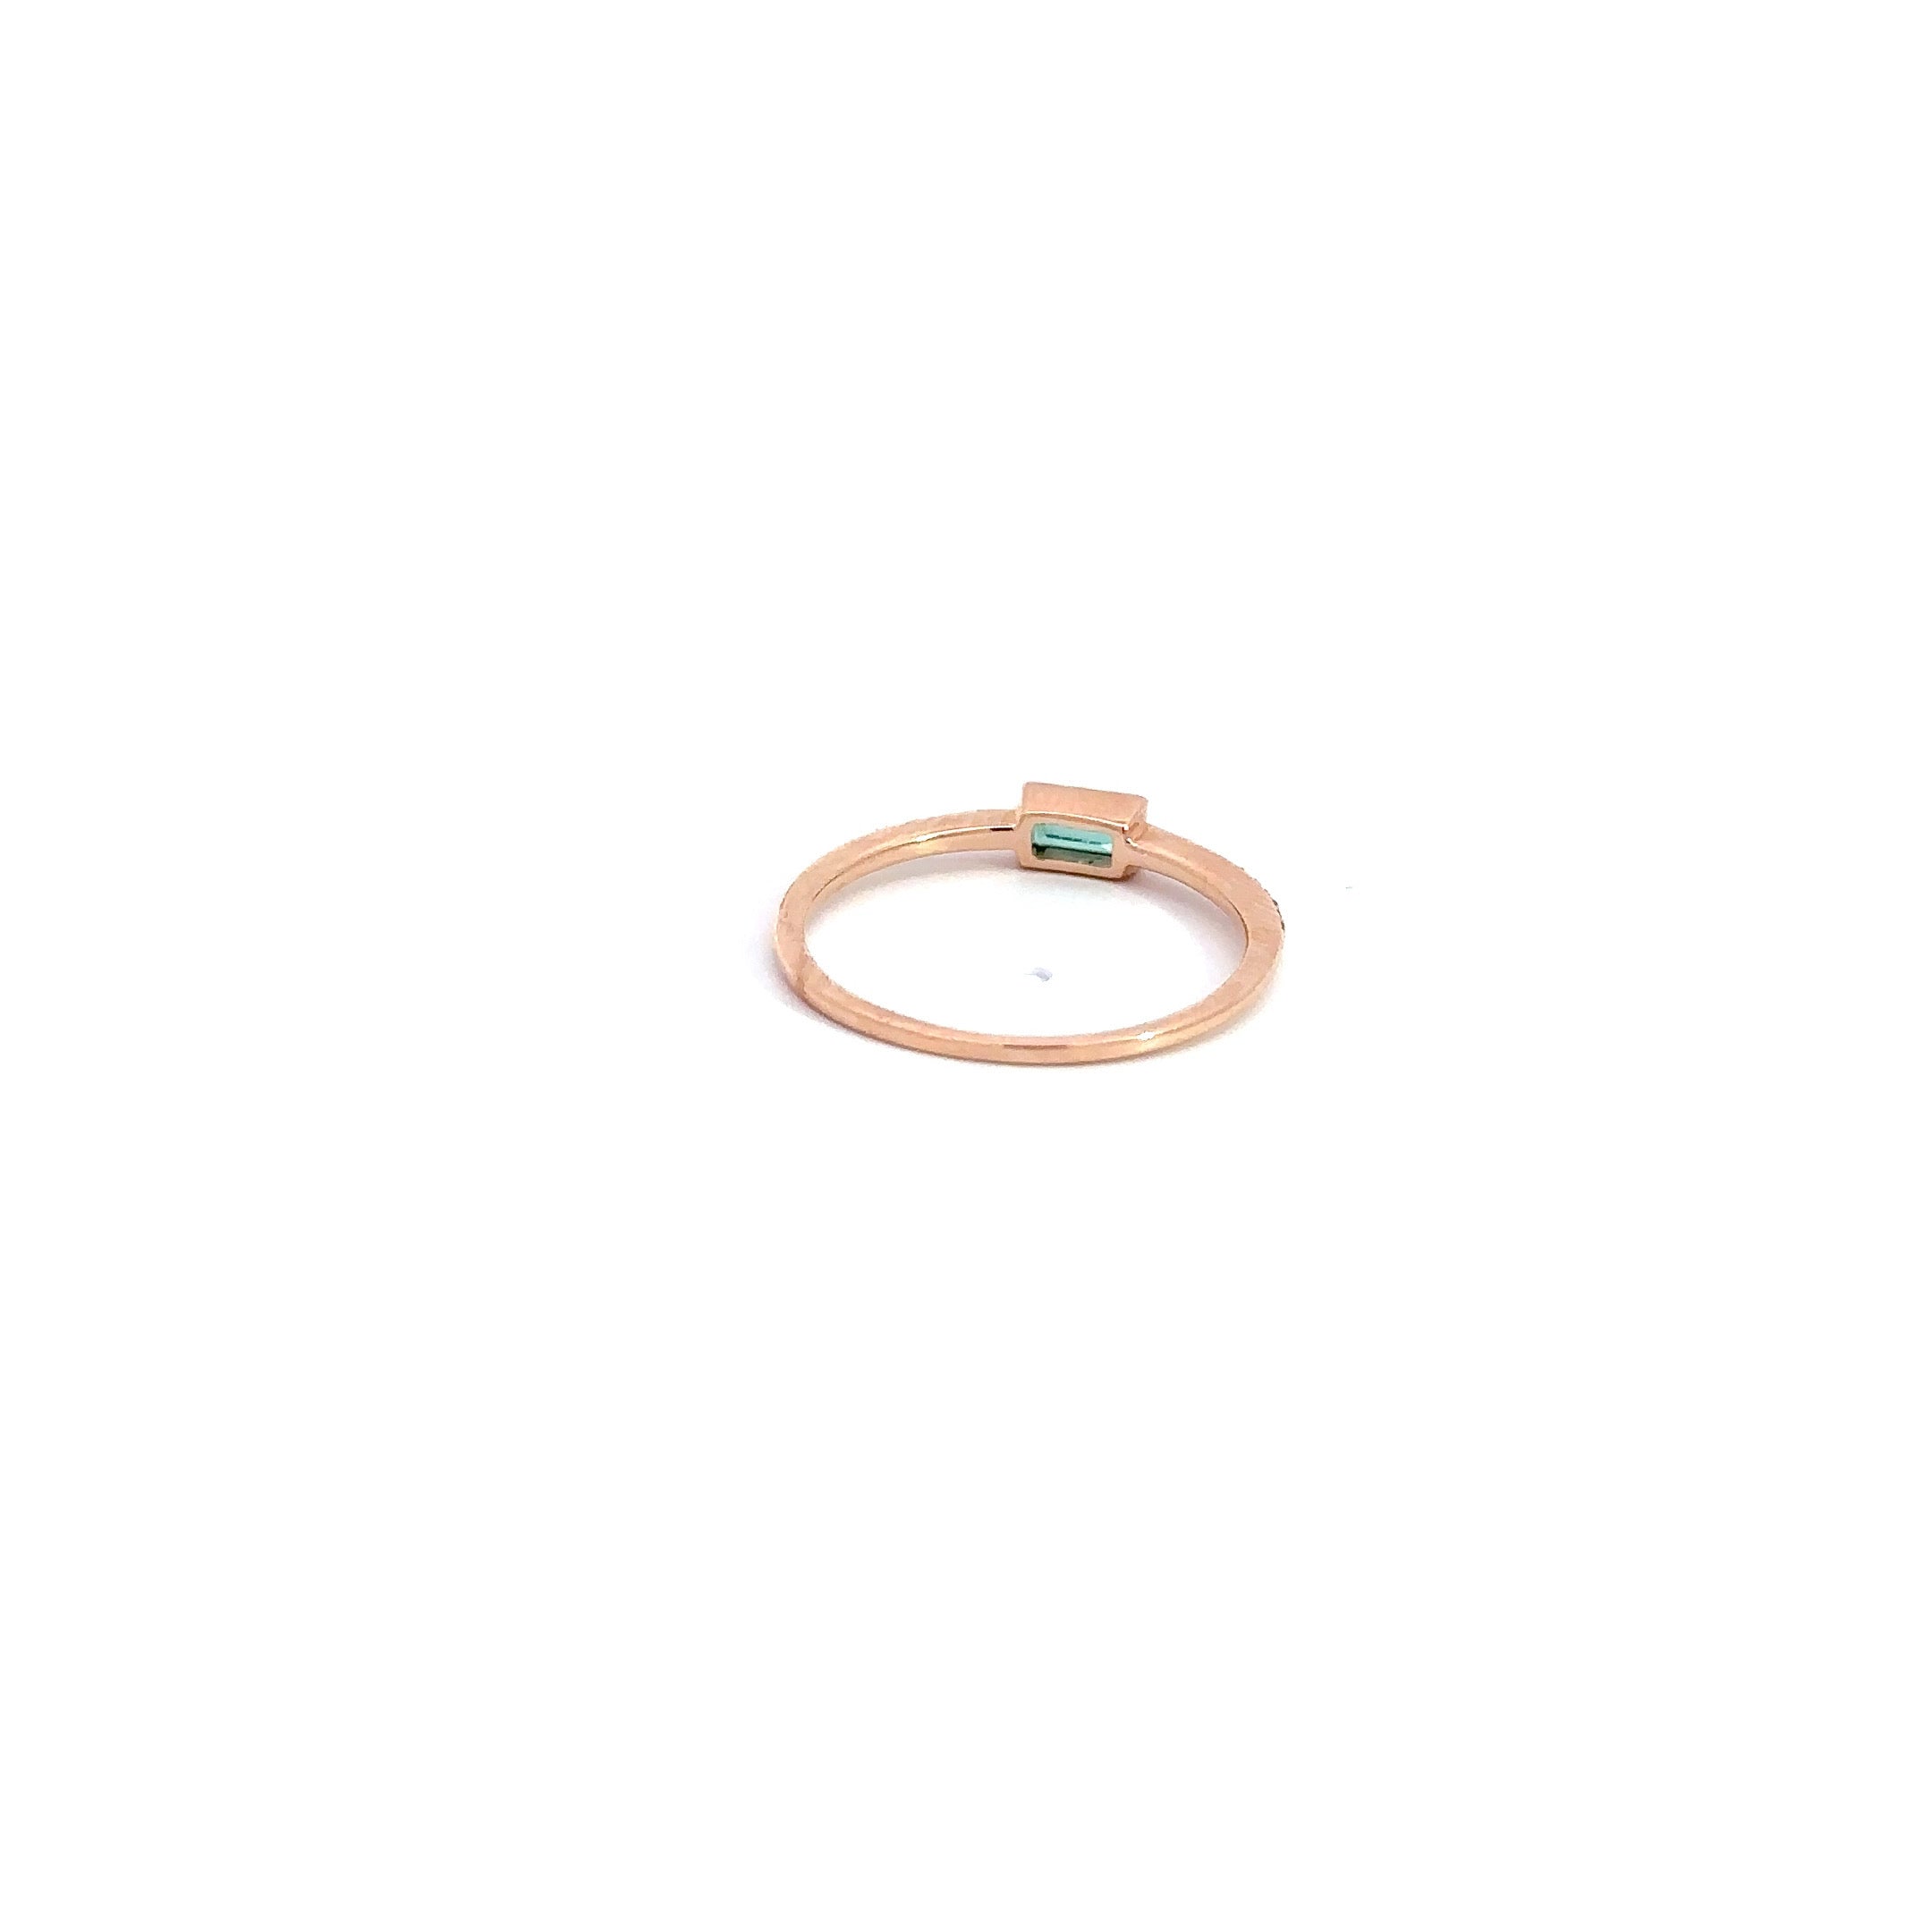 WD546 - 14kt Gold Single Emerald & Diamond Ring